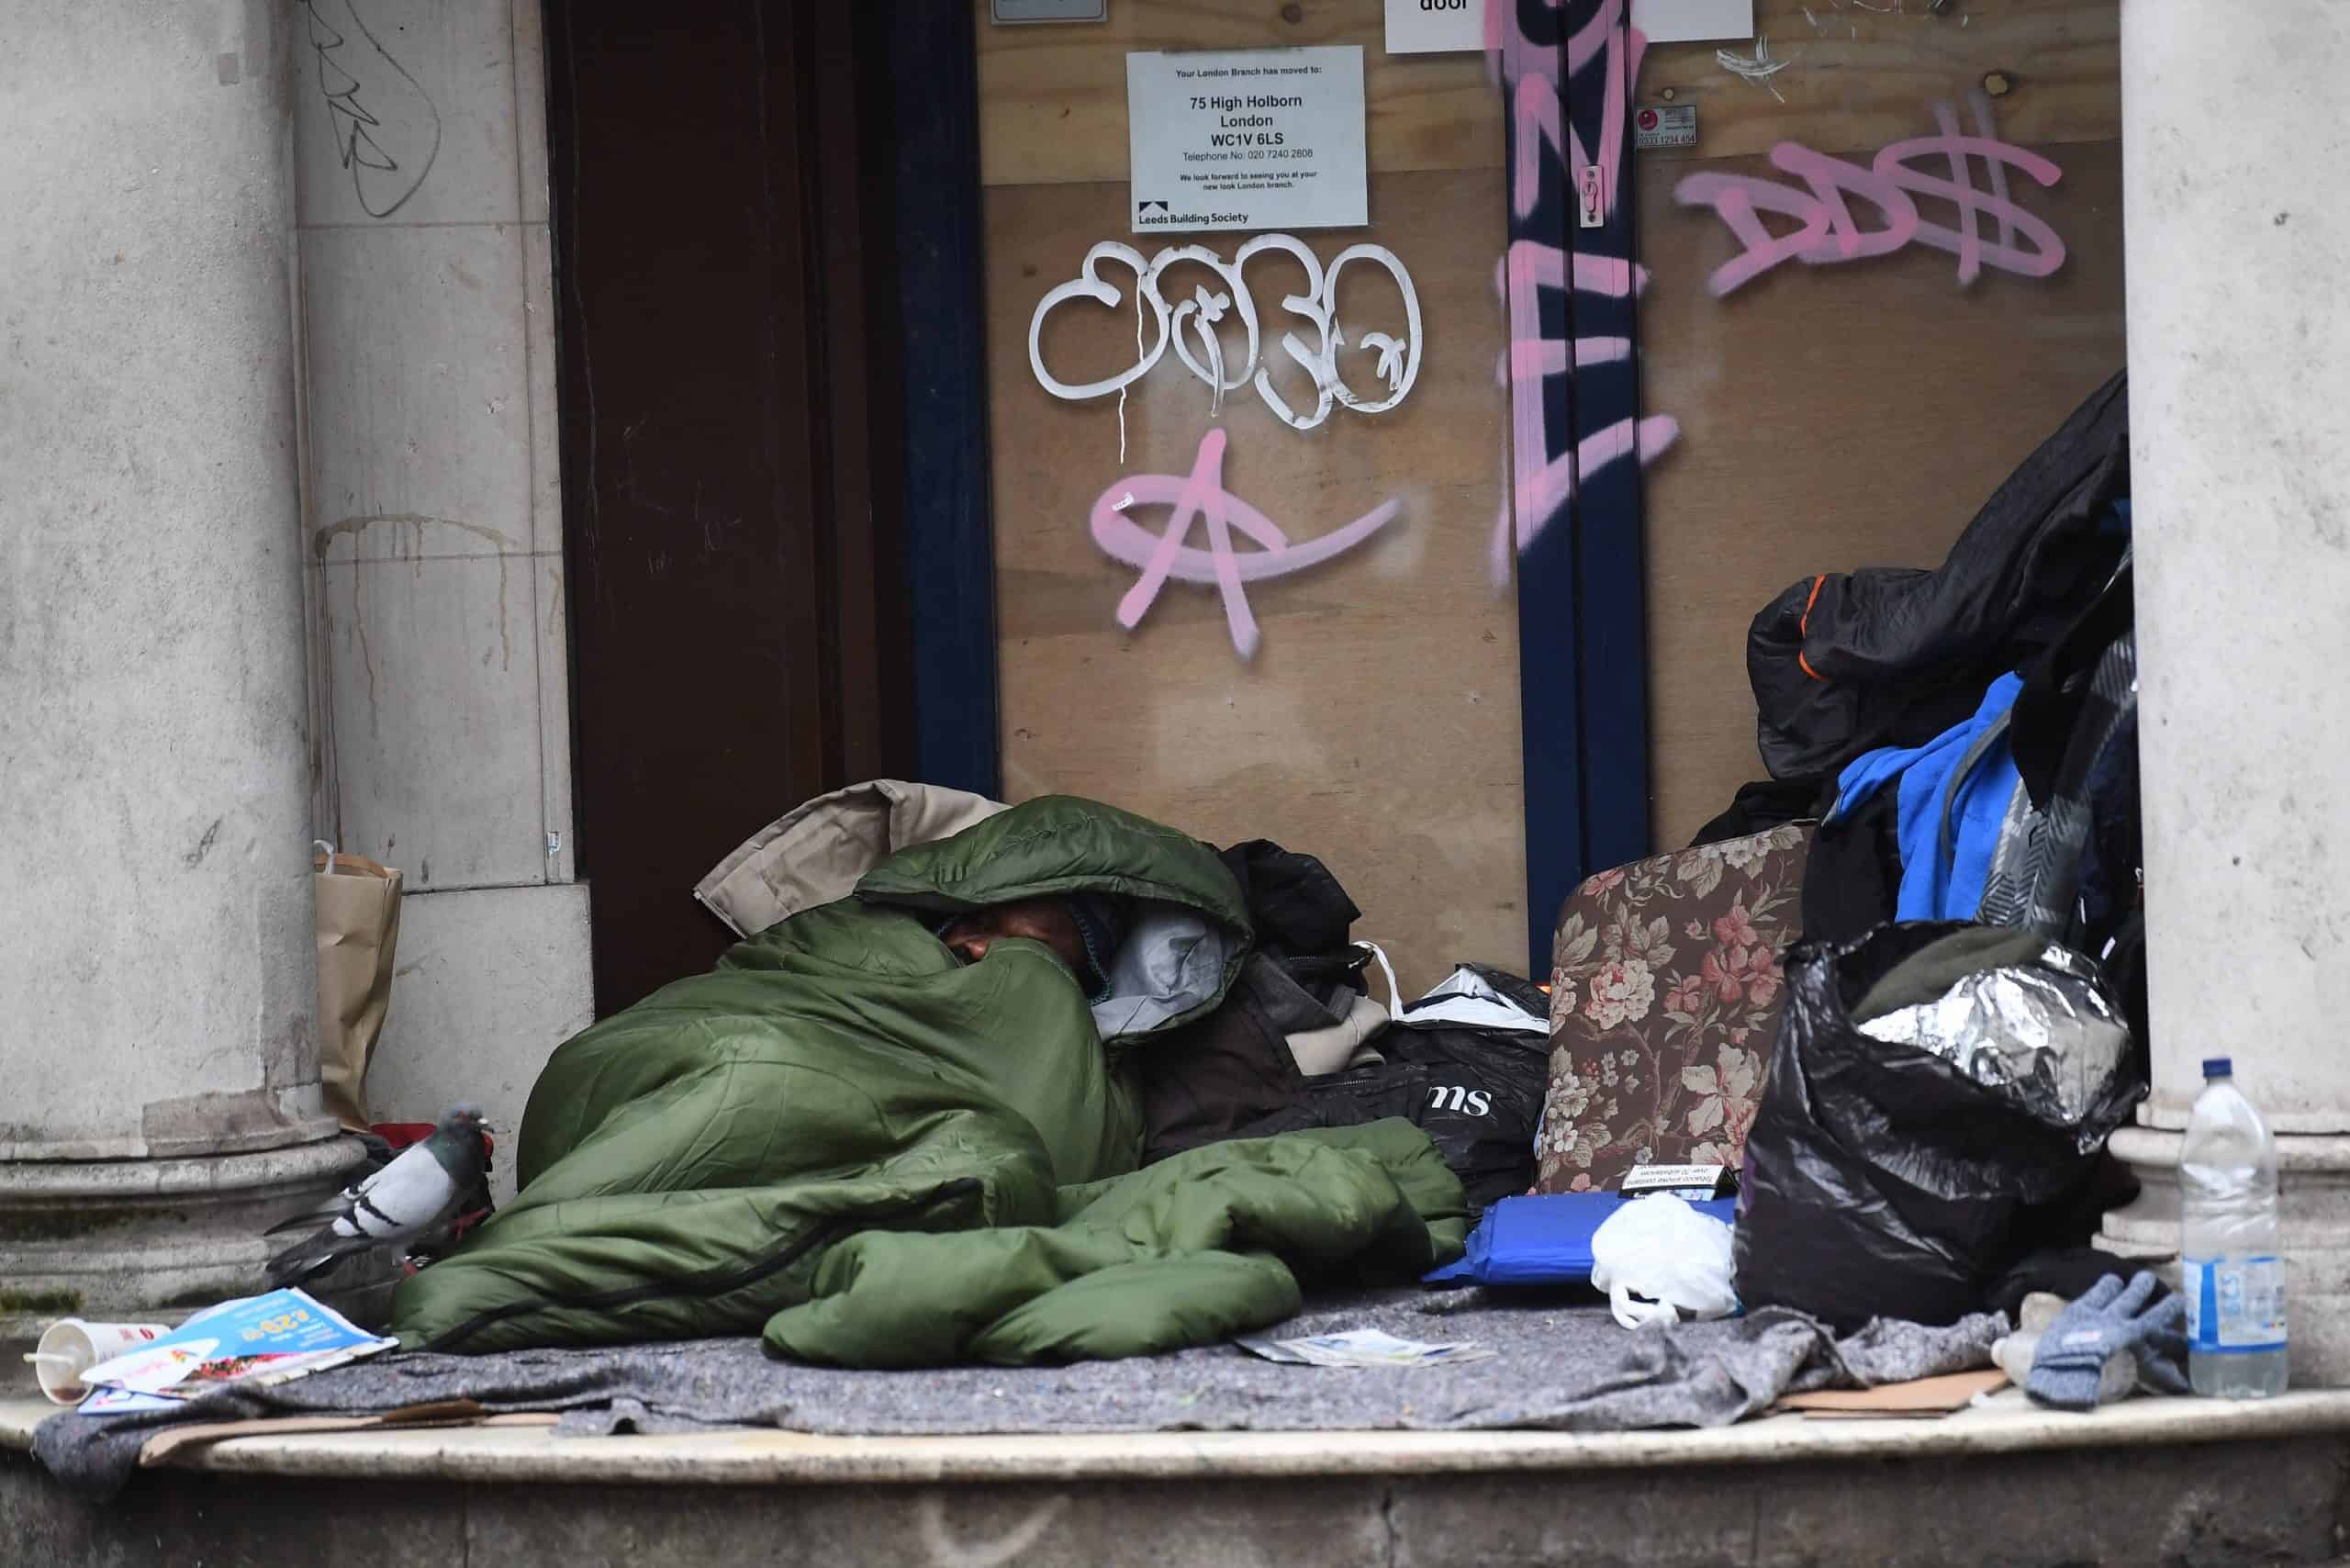 More than 70,000 households homeless or at risk last summer